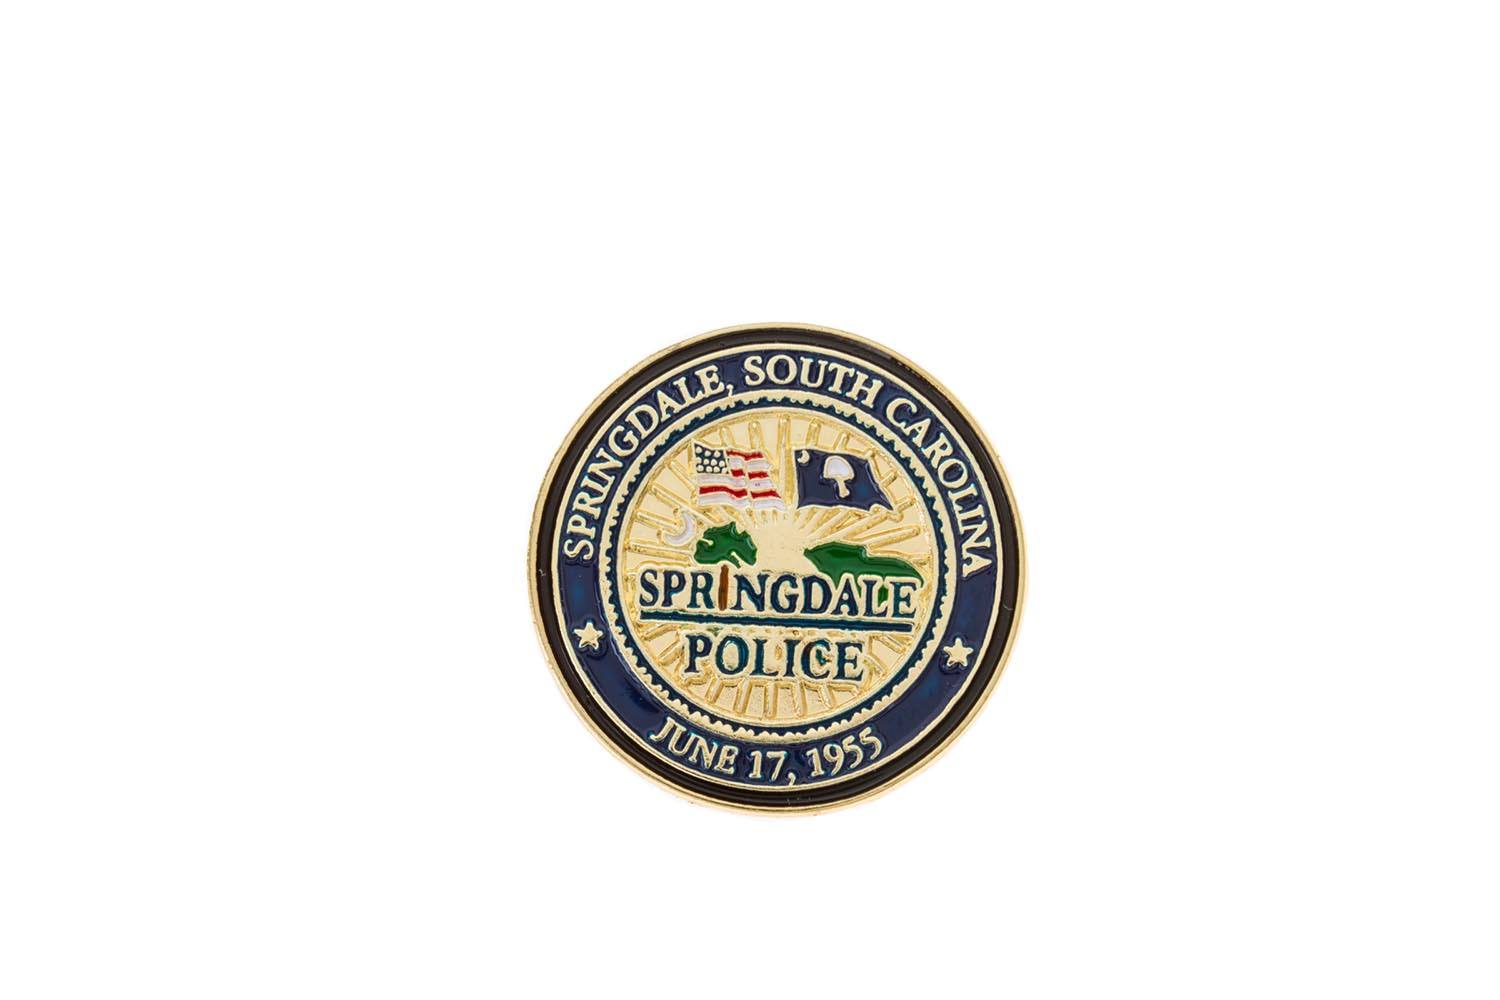 Police lapel pins